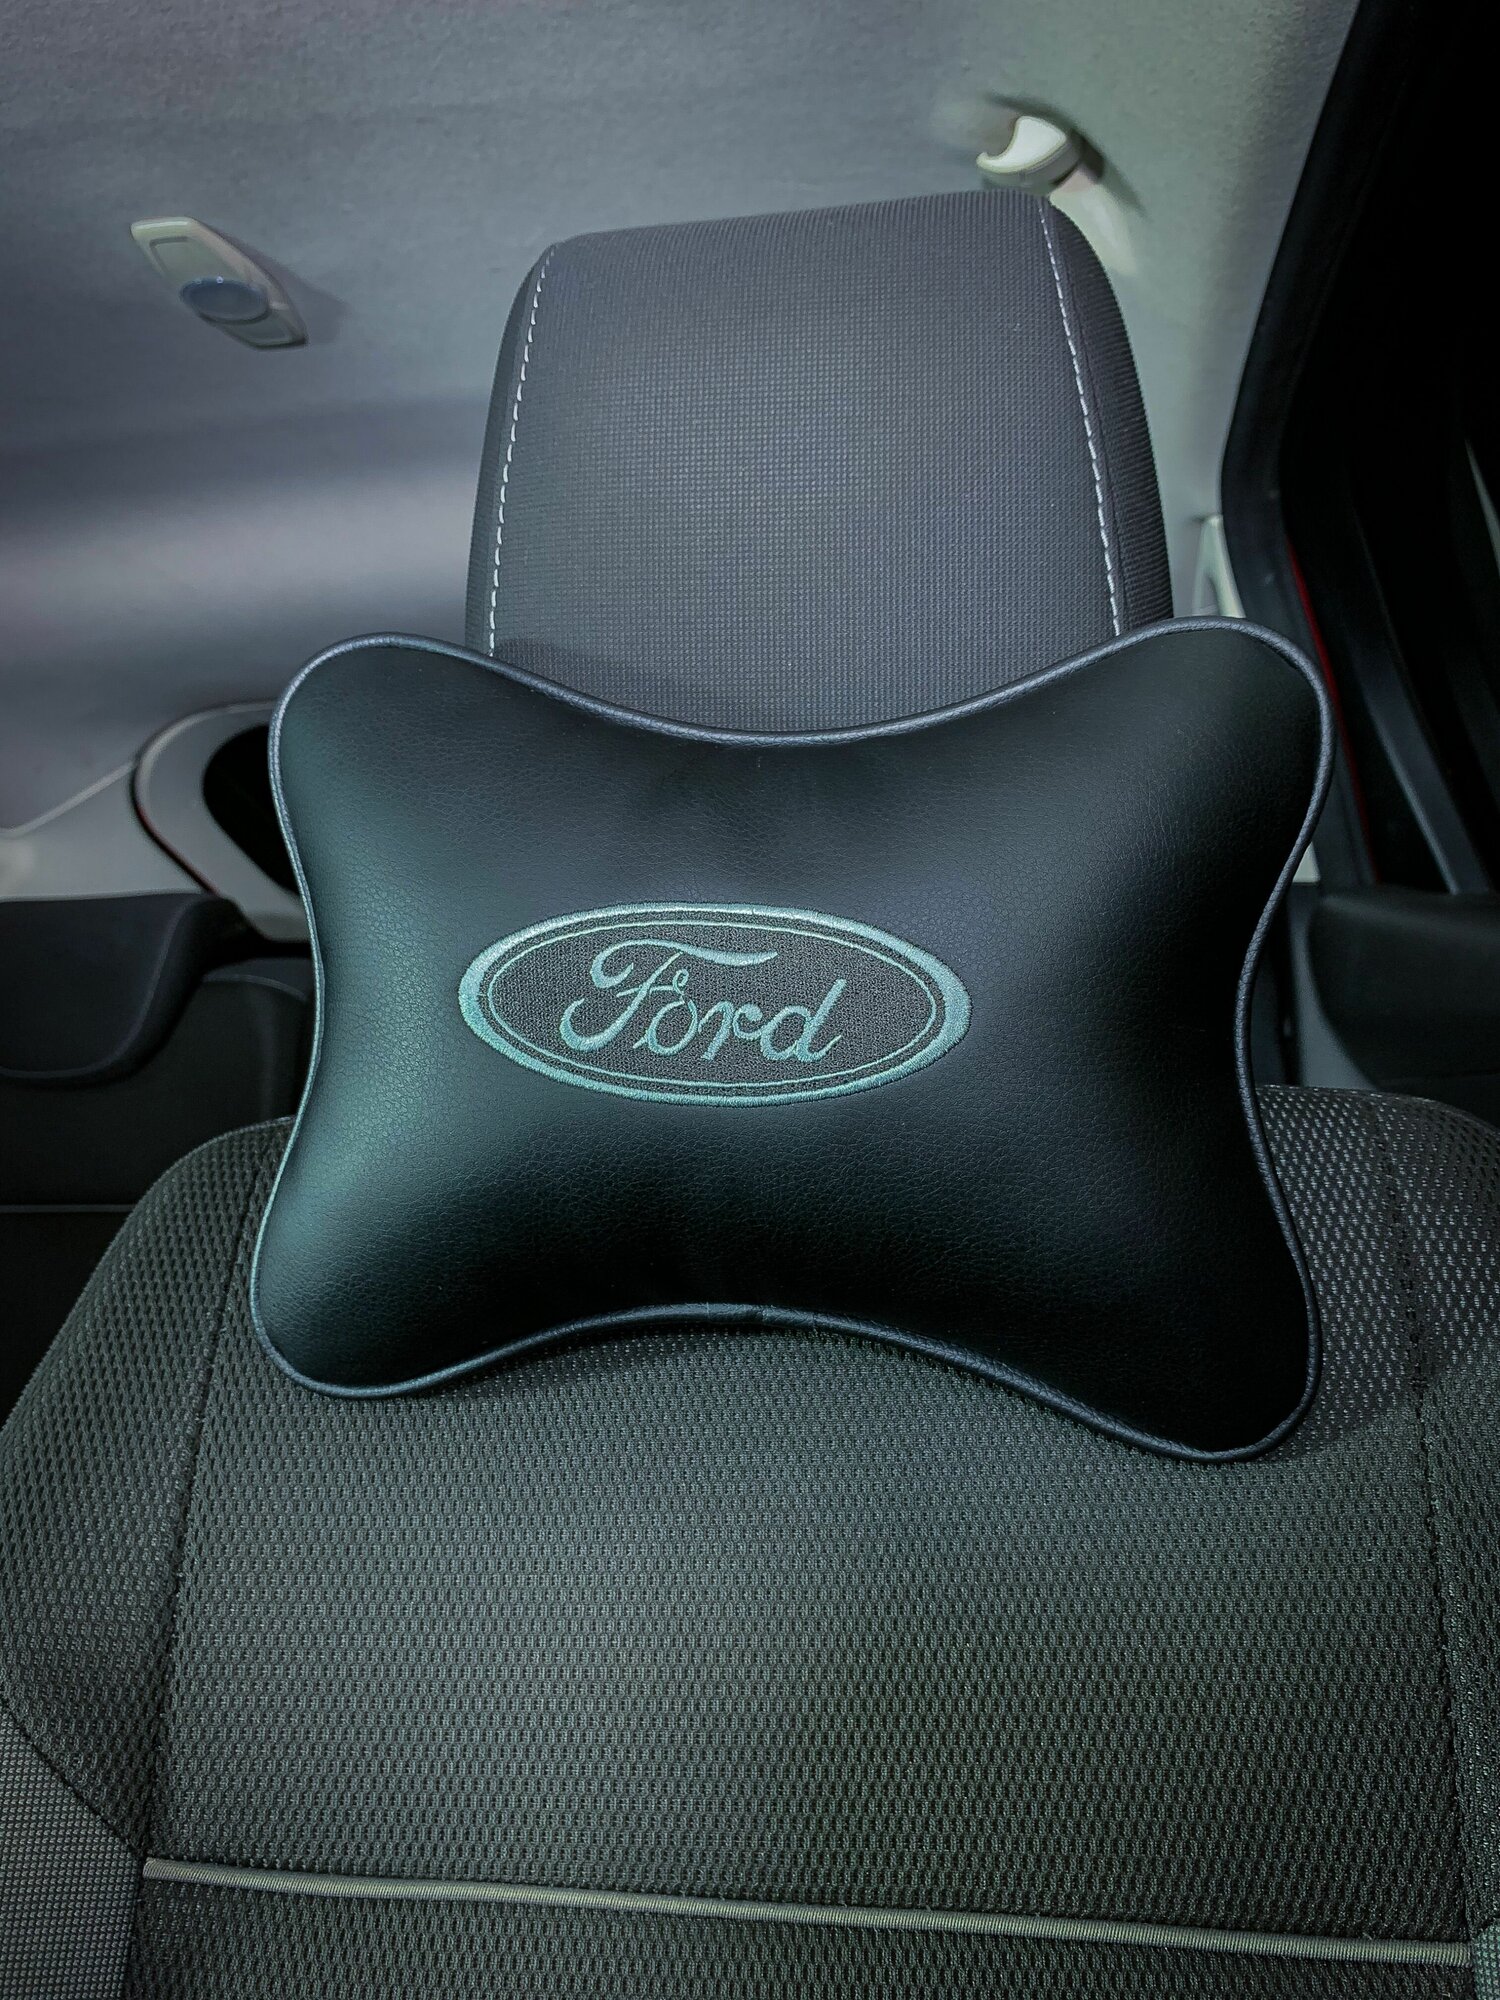 На подголовник Ford